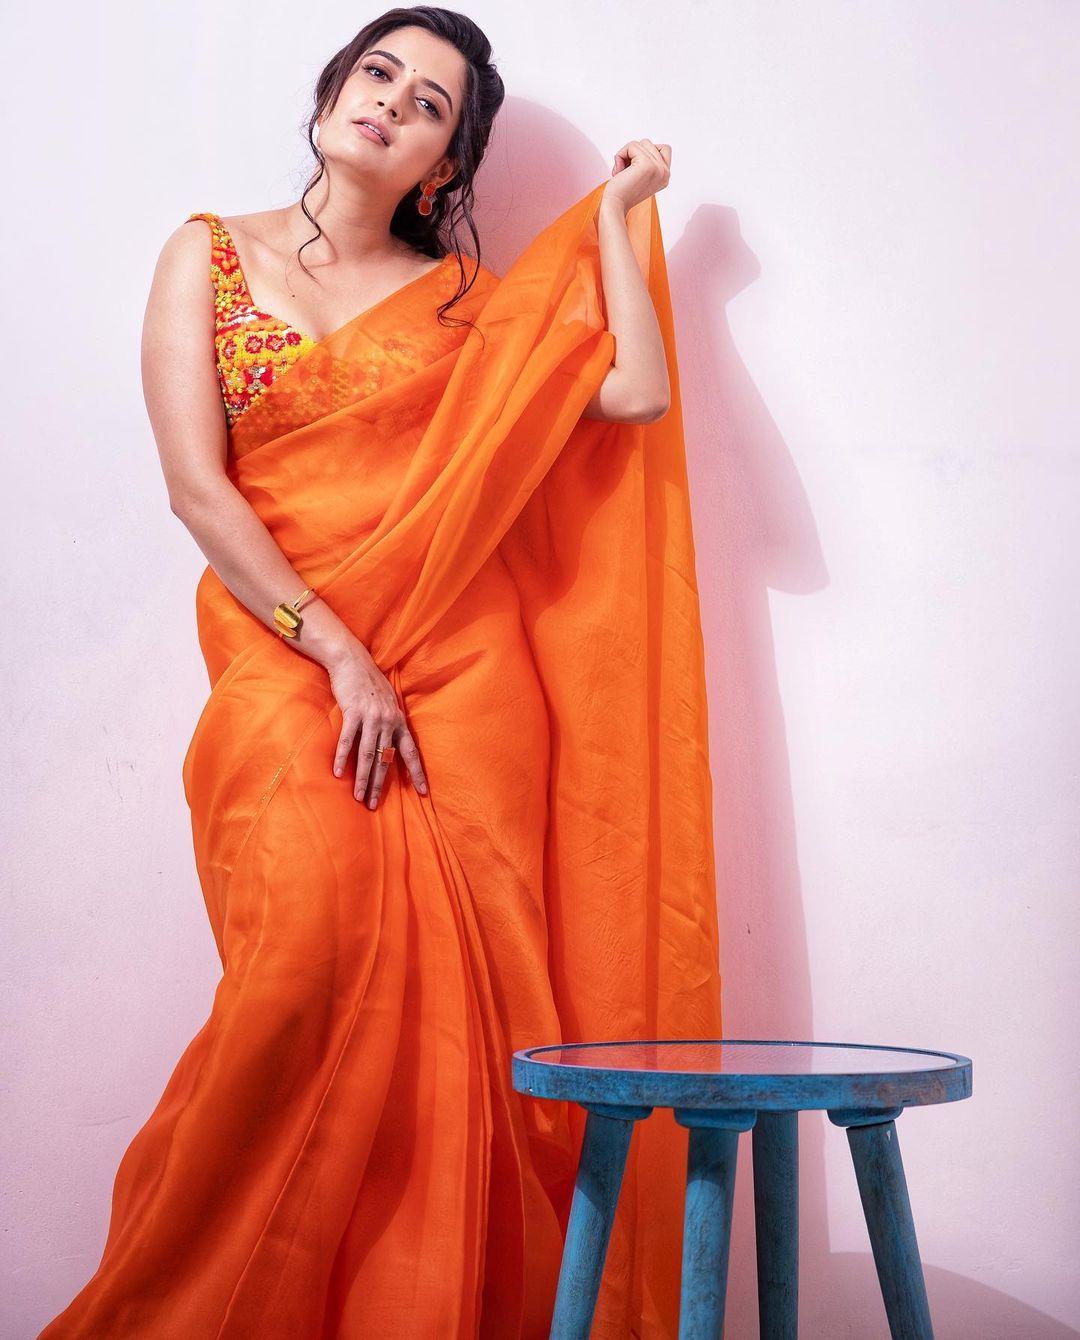 Ashika Ranganath Sex Video - Saree hot photos | Ashika Ranganath looking very attractive in saree  Photos: HD Images, Pictures, Stills, First Look Posters of Saree hot photos  | Ashika Ranganath looking very attractive in saree Movie -